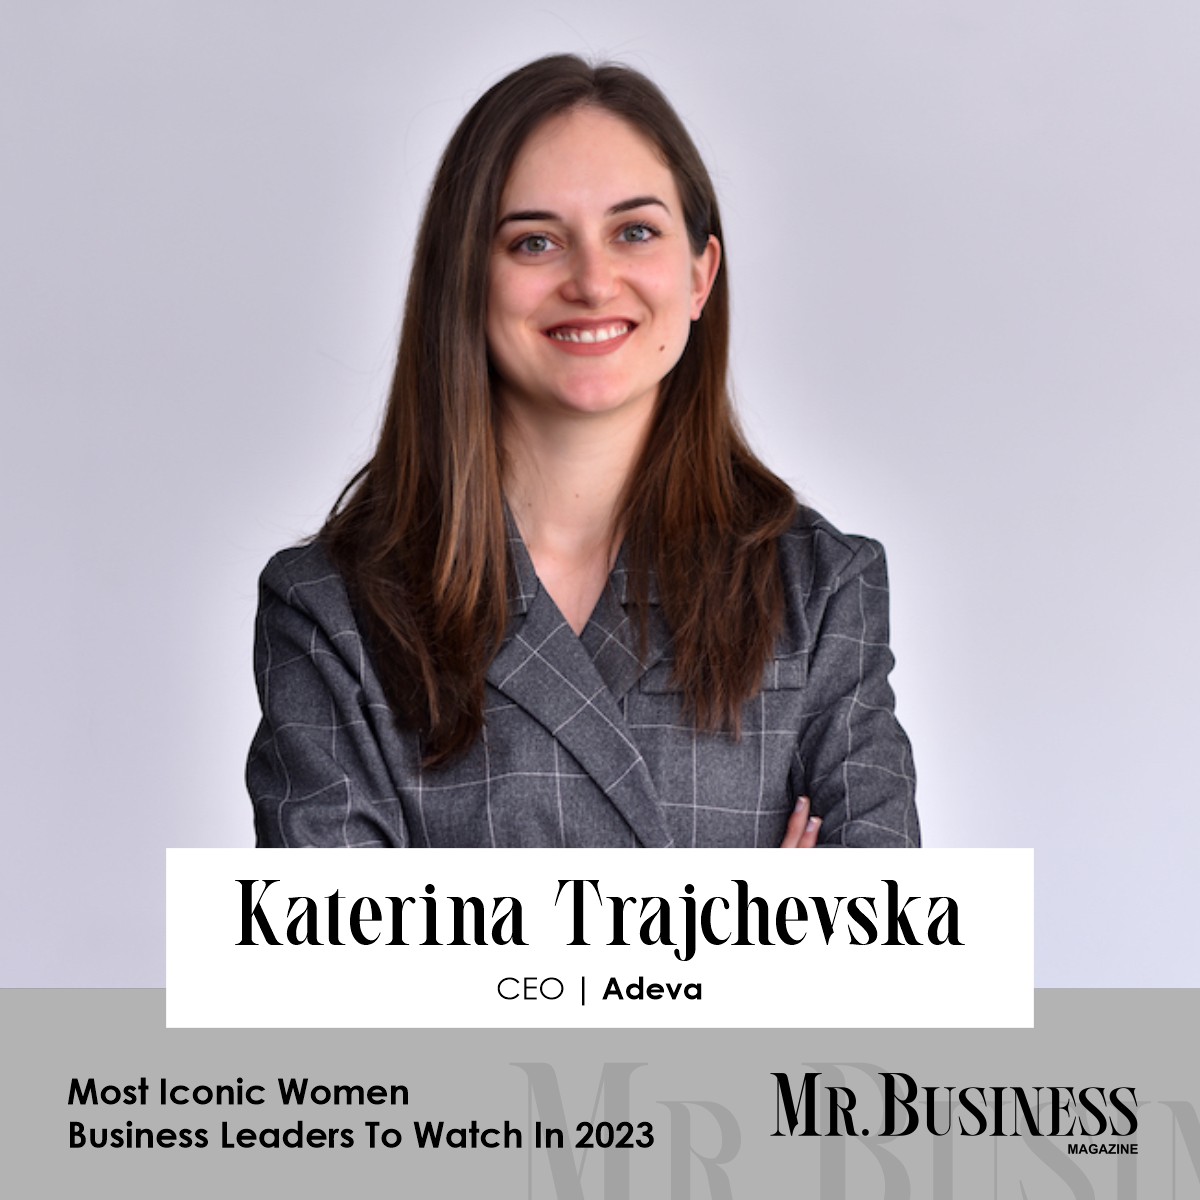 Katerina Trajchevska- Utilizing Technology for Betterment